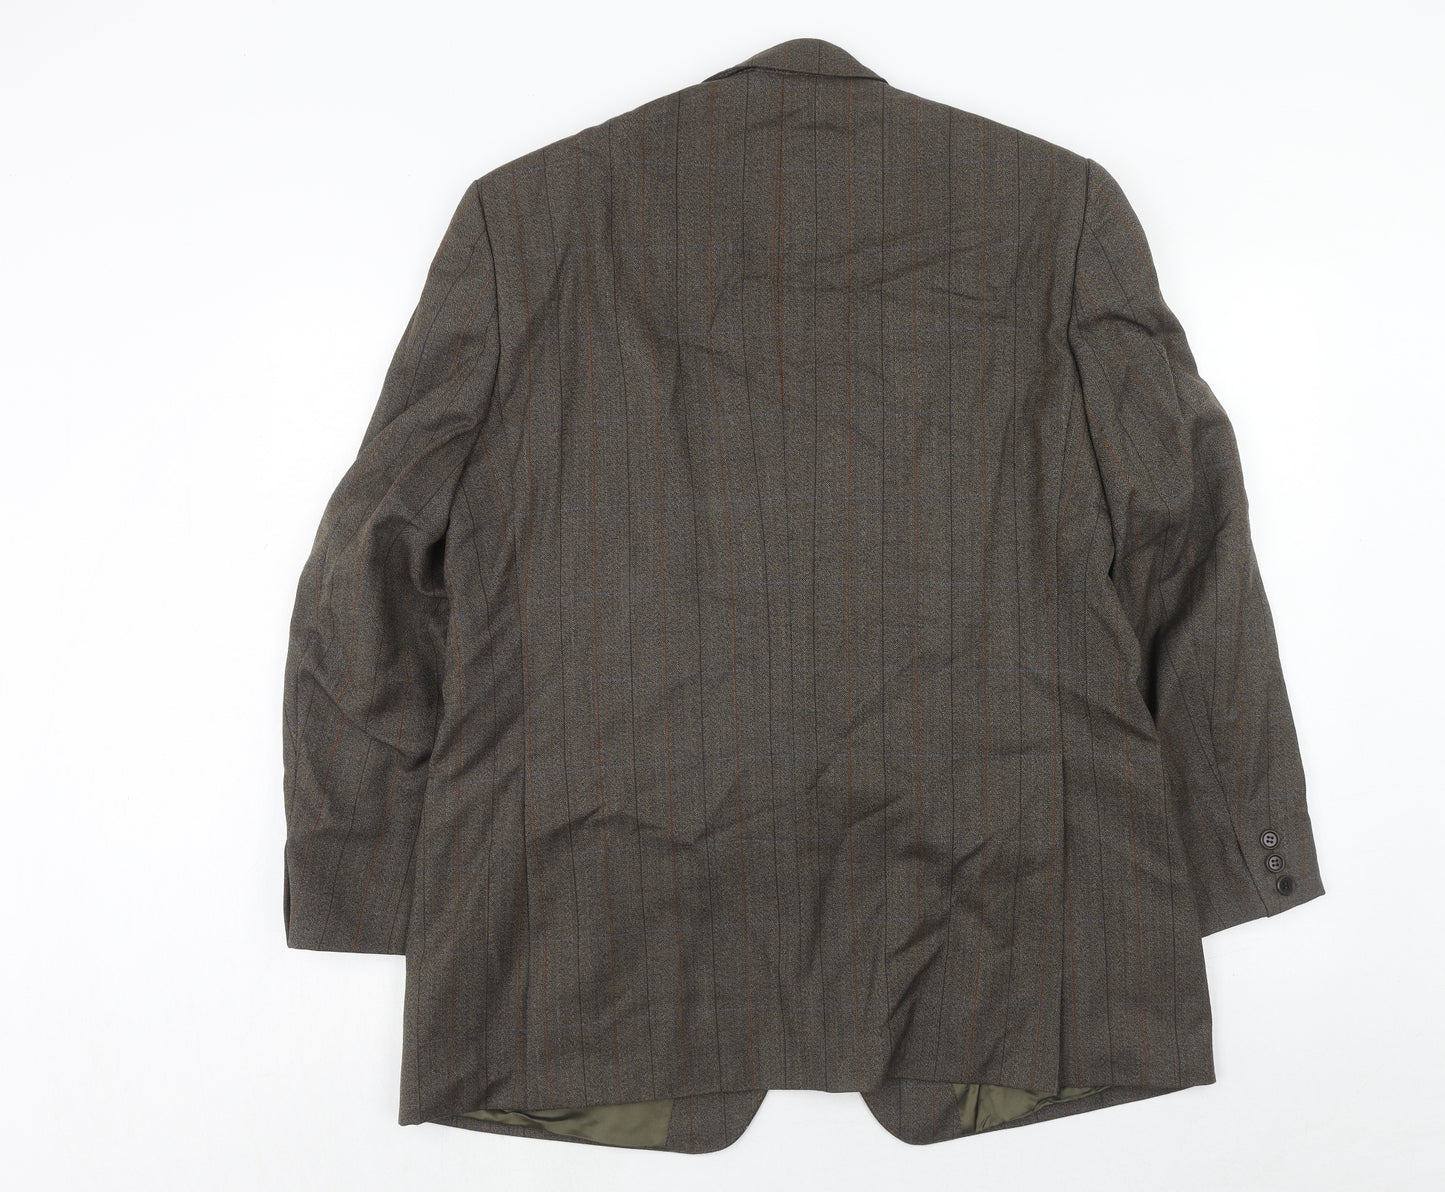 Magee Mens Green Geometric Wool Jacket Suit Jacket Size 40 Regular